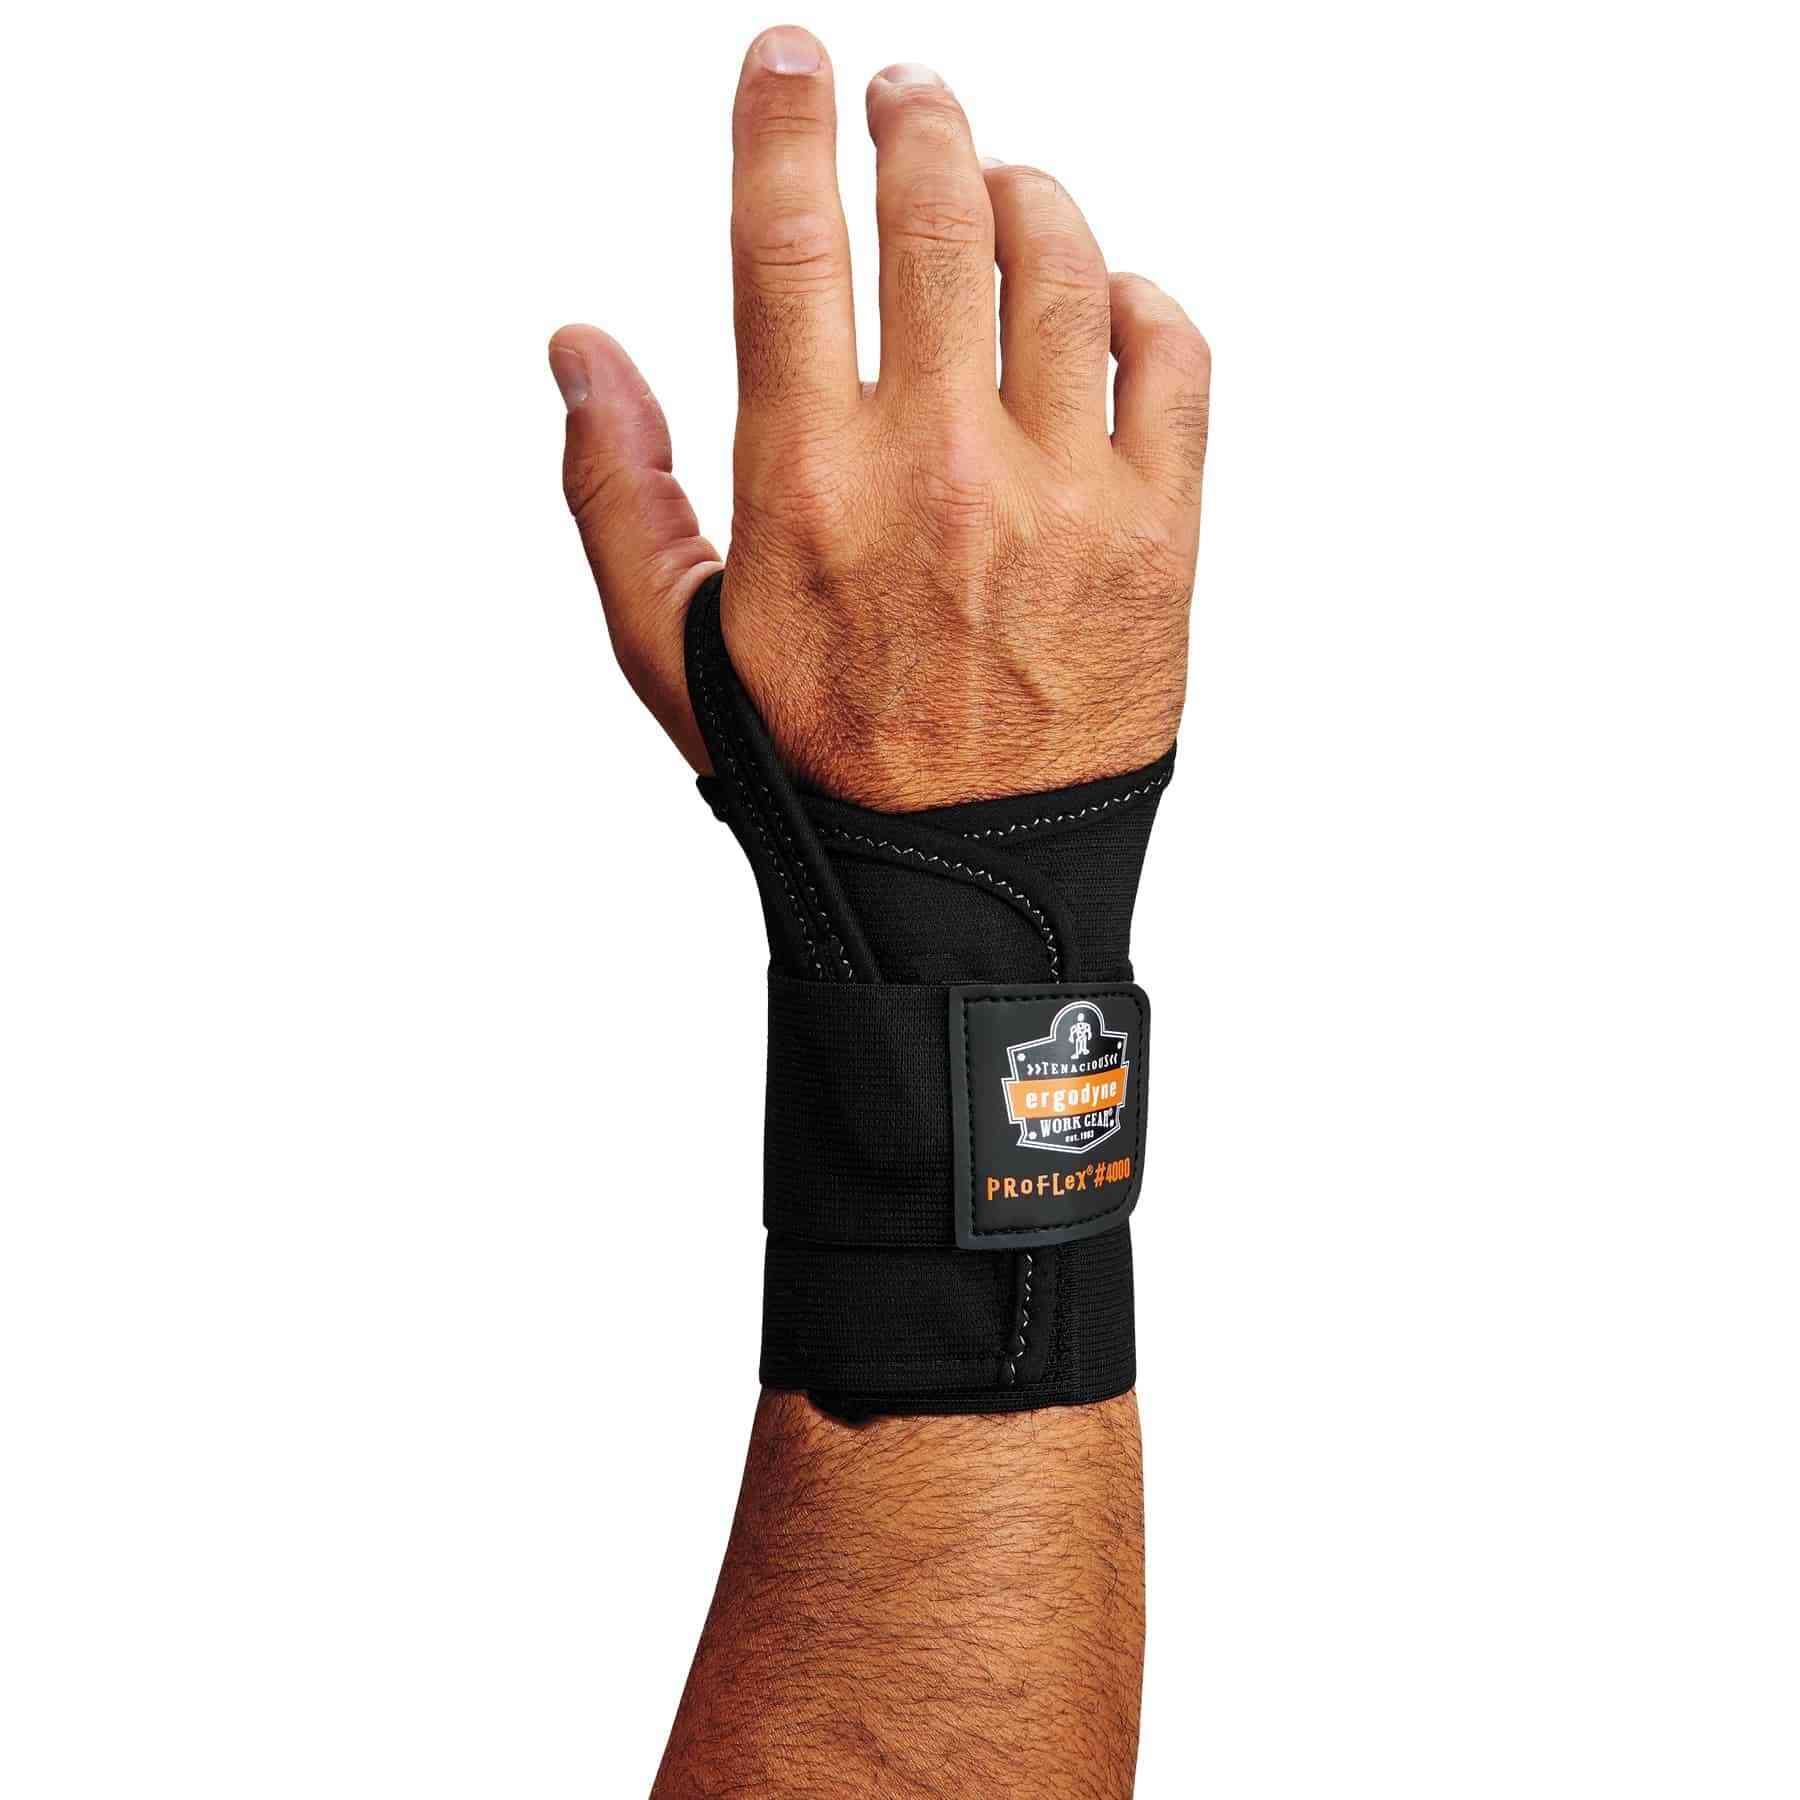 Single Strap Wrist Support - Wrist Supports